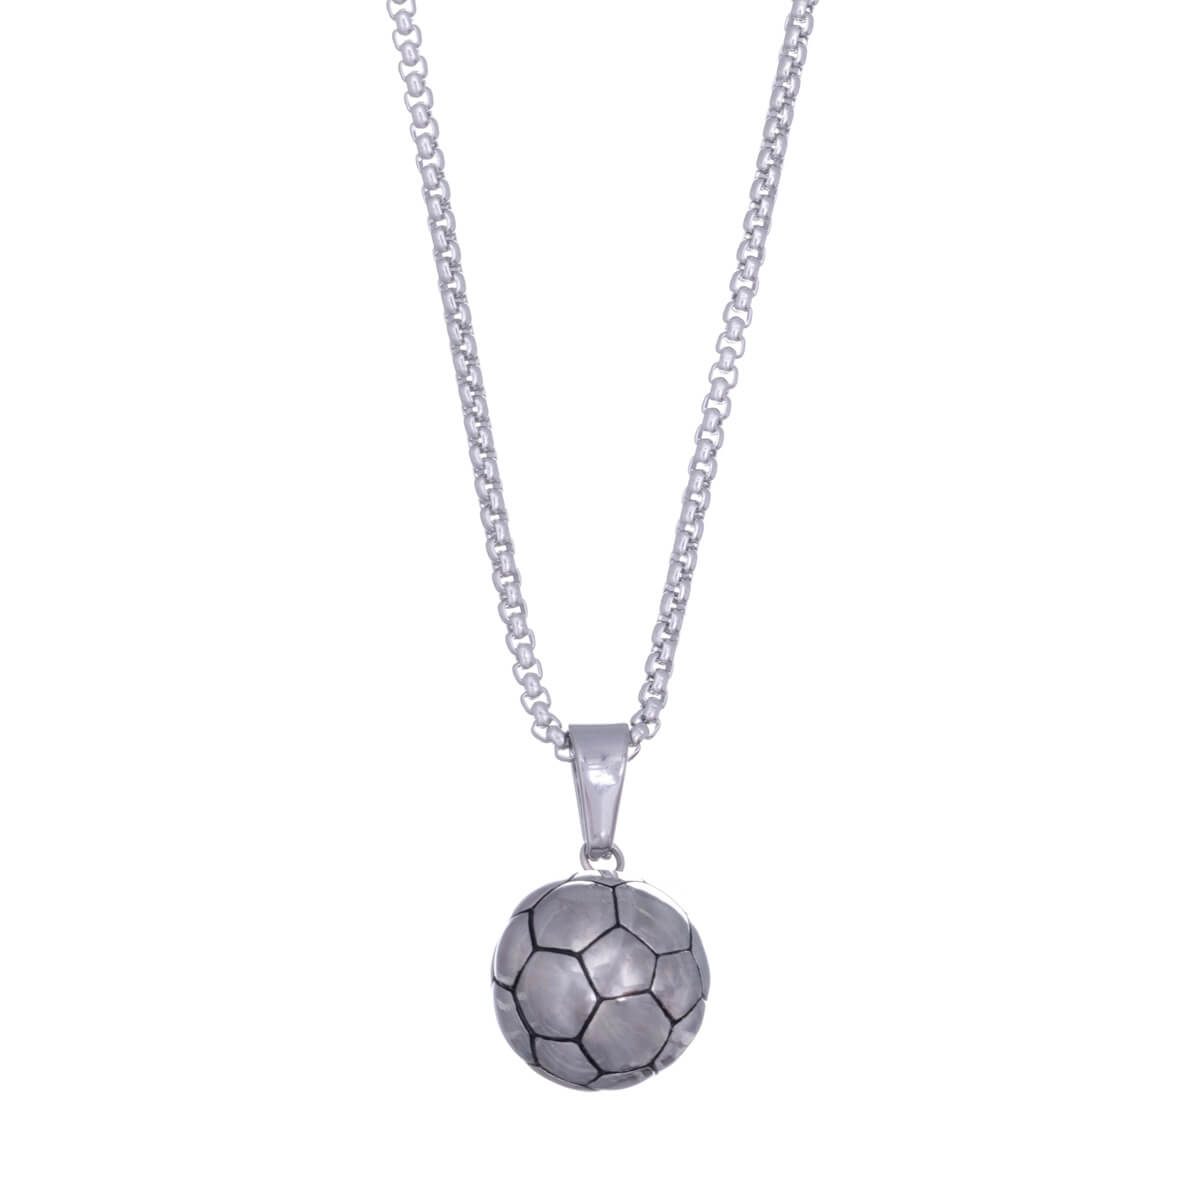 Football pendant steel necklace 60cm (Steel 316L)